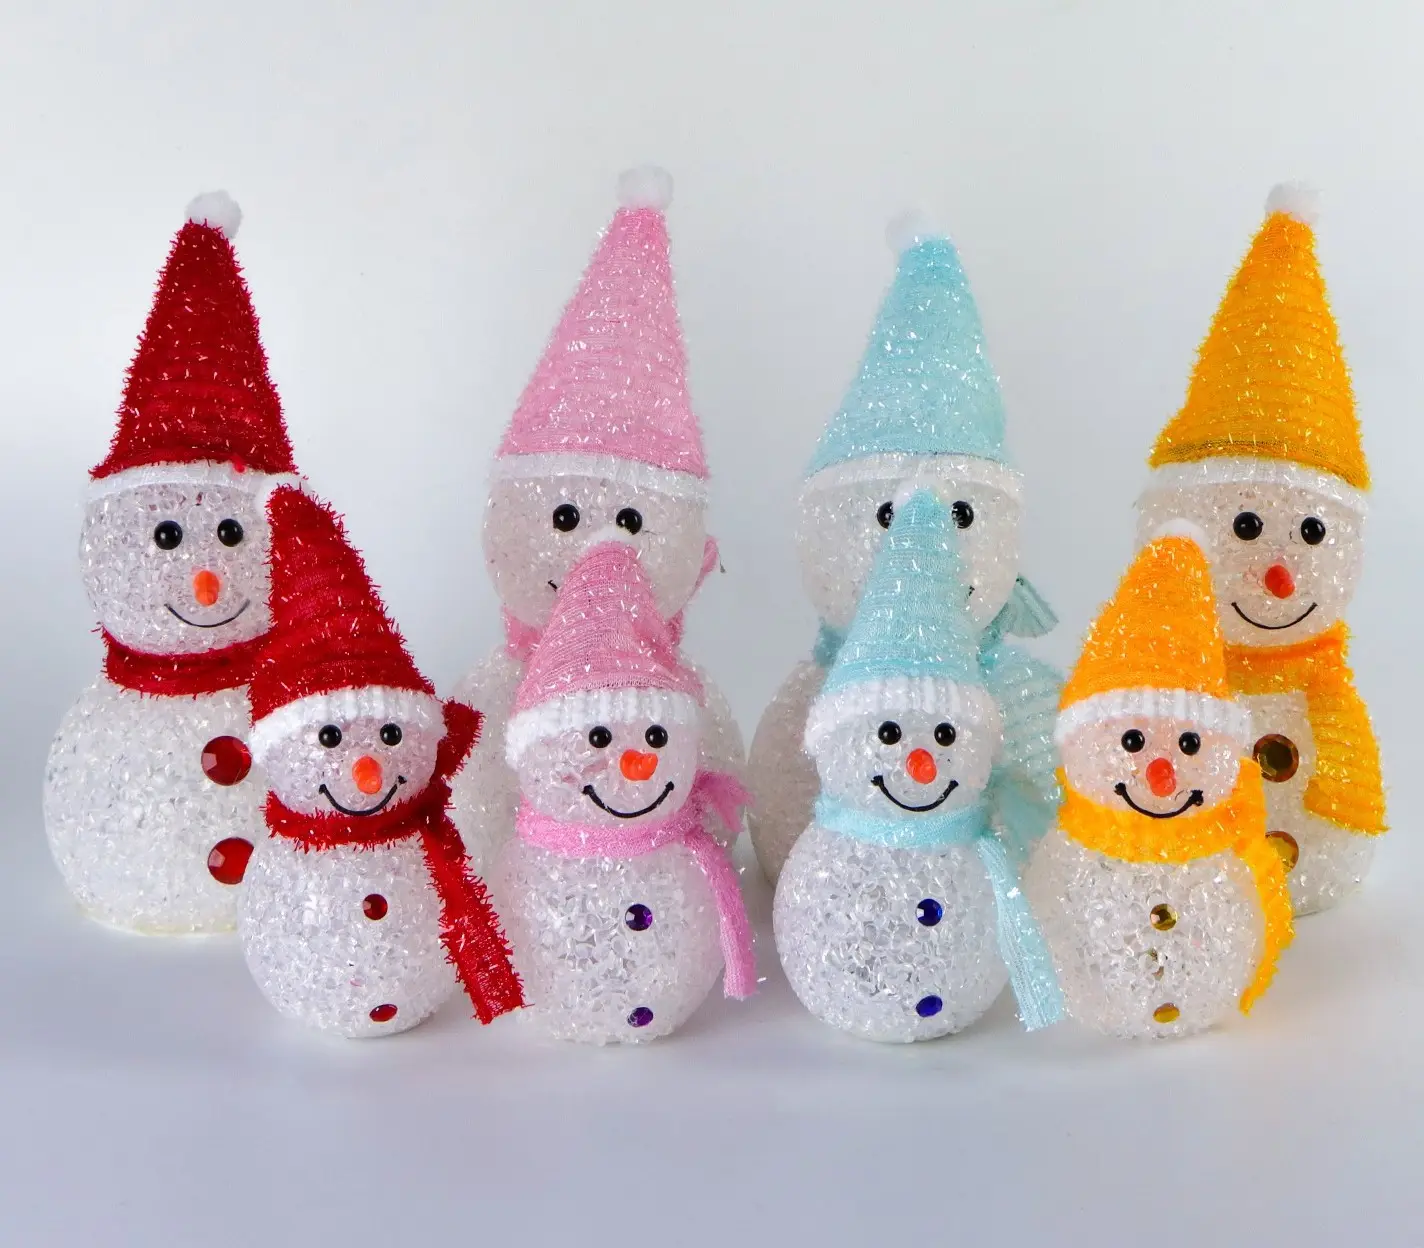 Cool Christmas Light Rice Grain Snowman Doll Lighting Festival Decoration Gift New Year Ornament